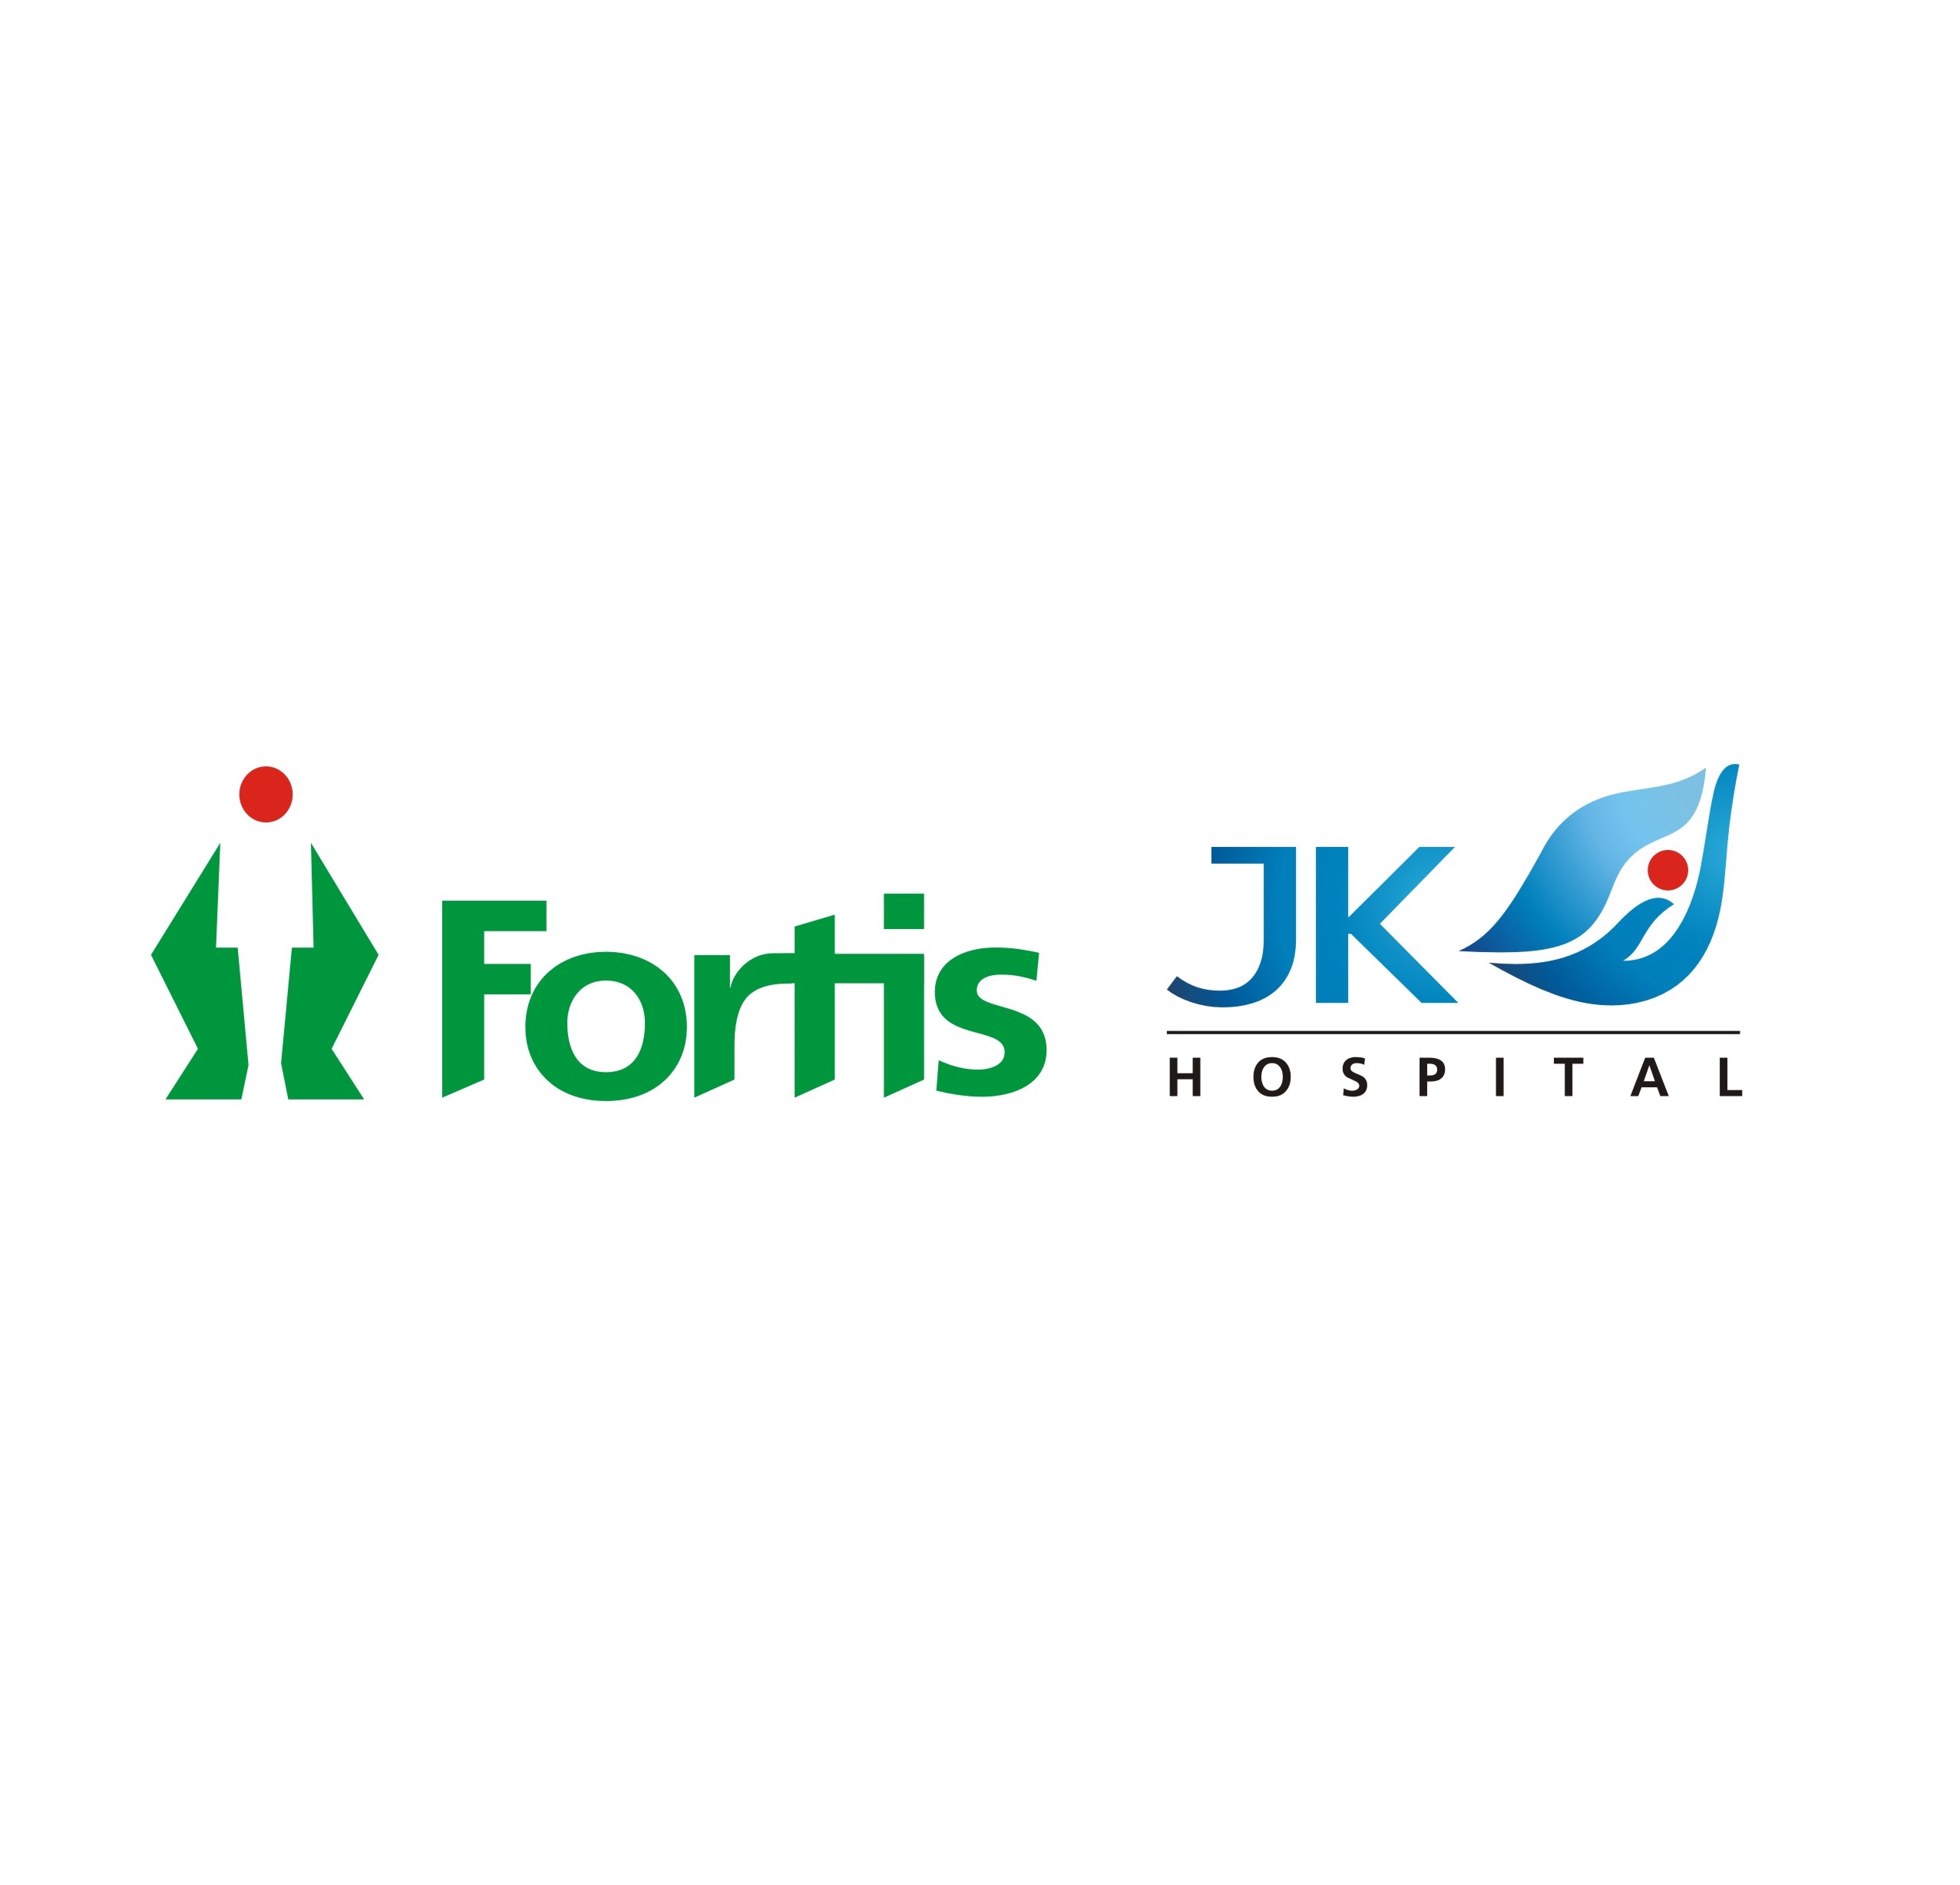 Fortis JK Hospital - Logo